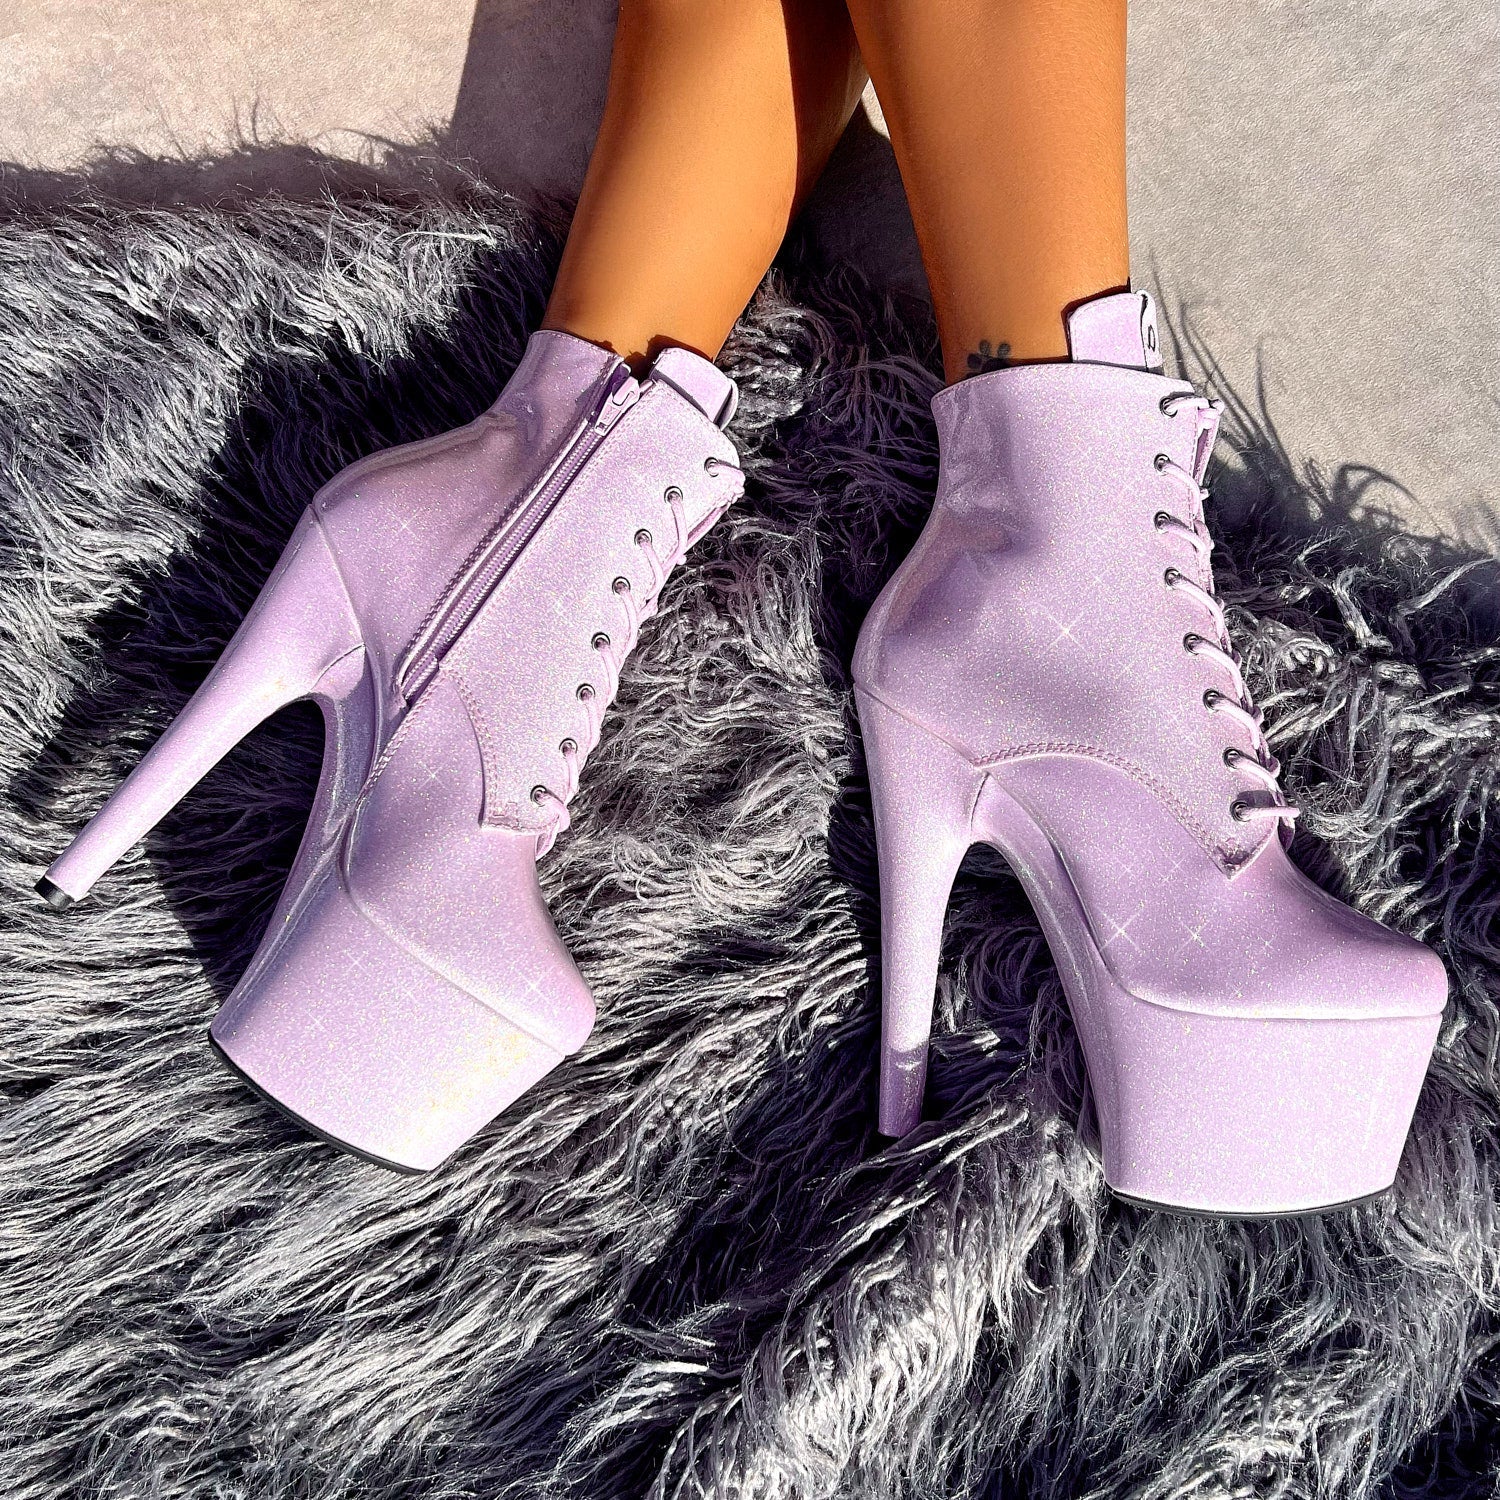 The Glitterati Ankle Boot - Lilac Lovers - 7 INCH, stripper shoe, stripper heel, pole heel, not a pleaser, platform, dancer, pole dance, floor work